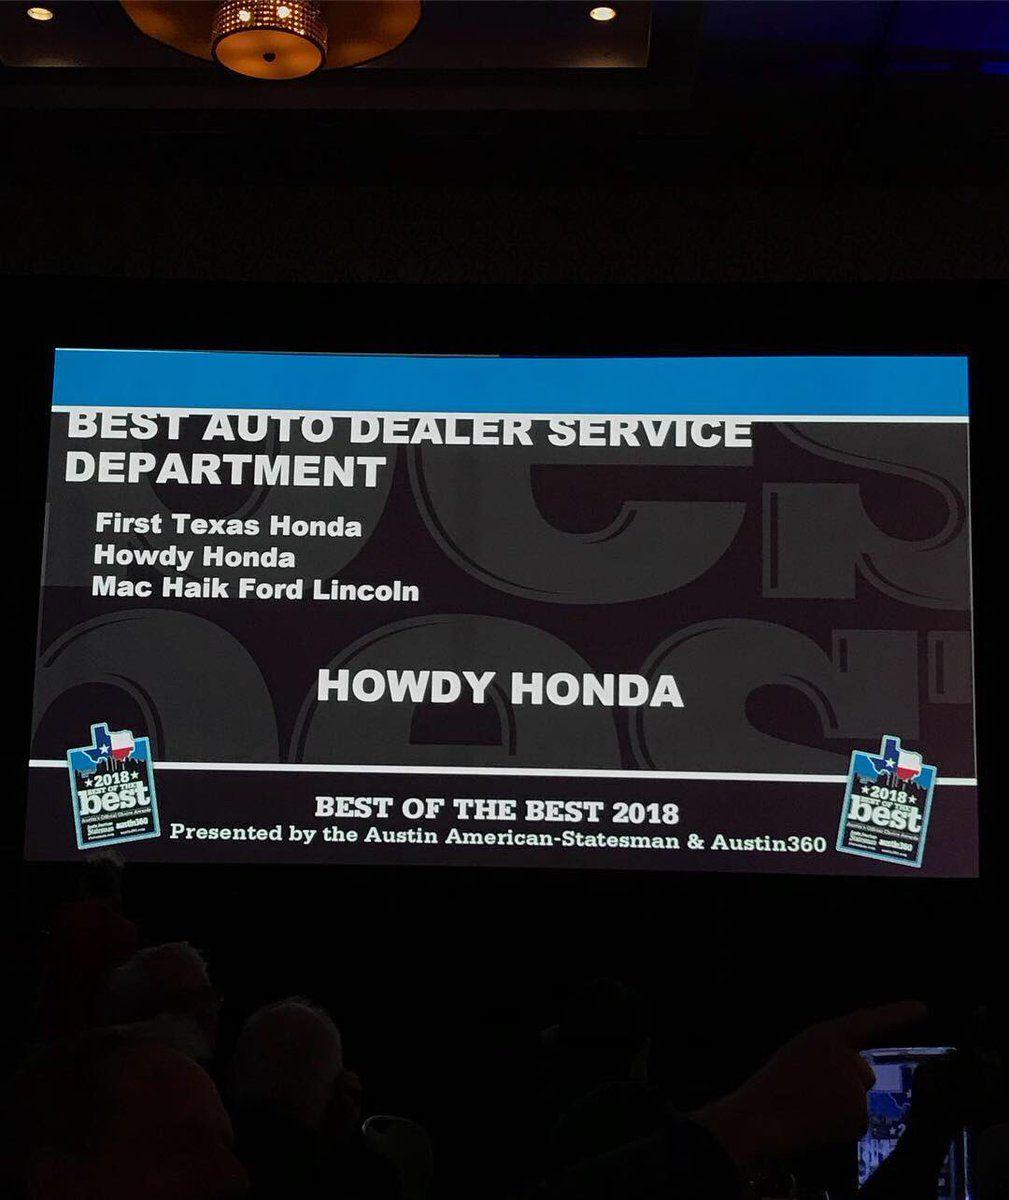 Howdy Honda Logo - Howdy Honda a night! Howdy Honda took home first